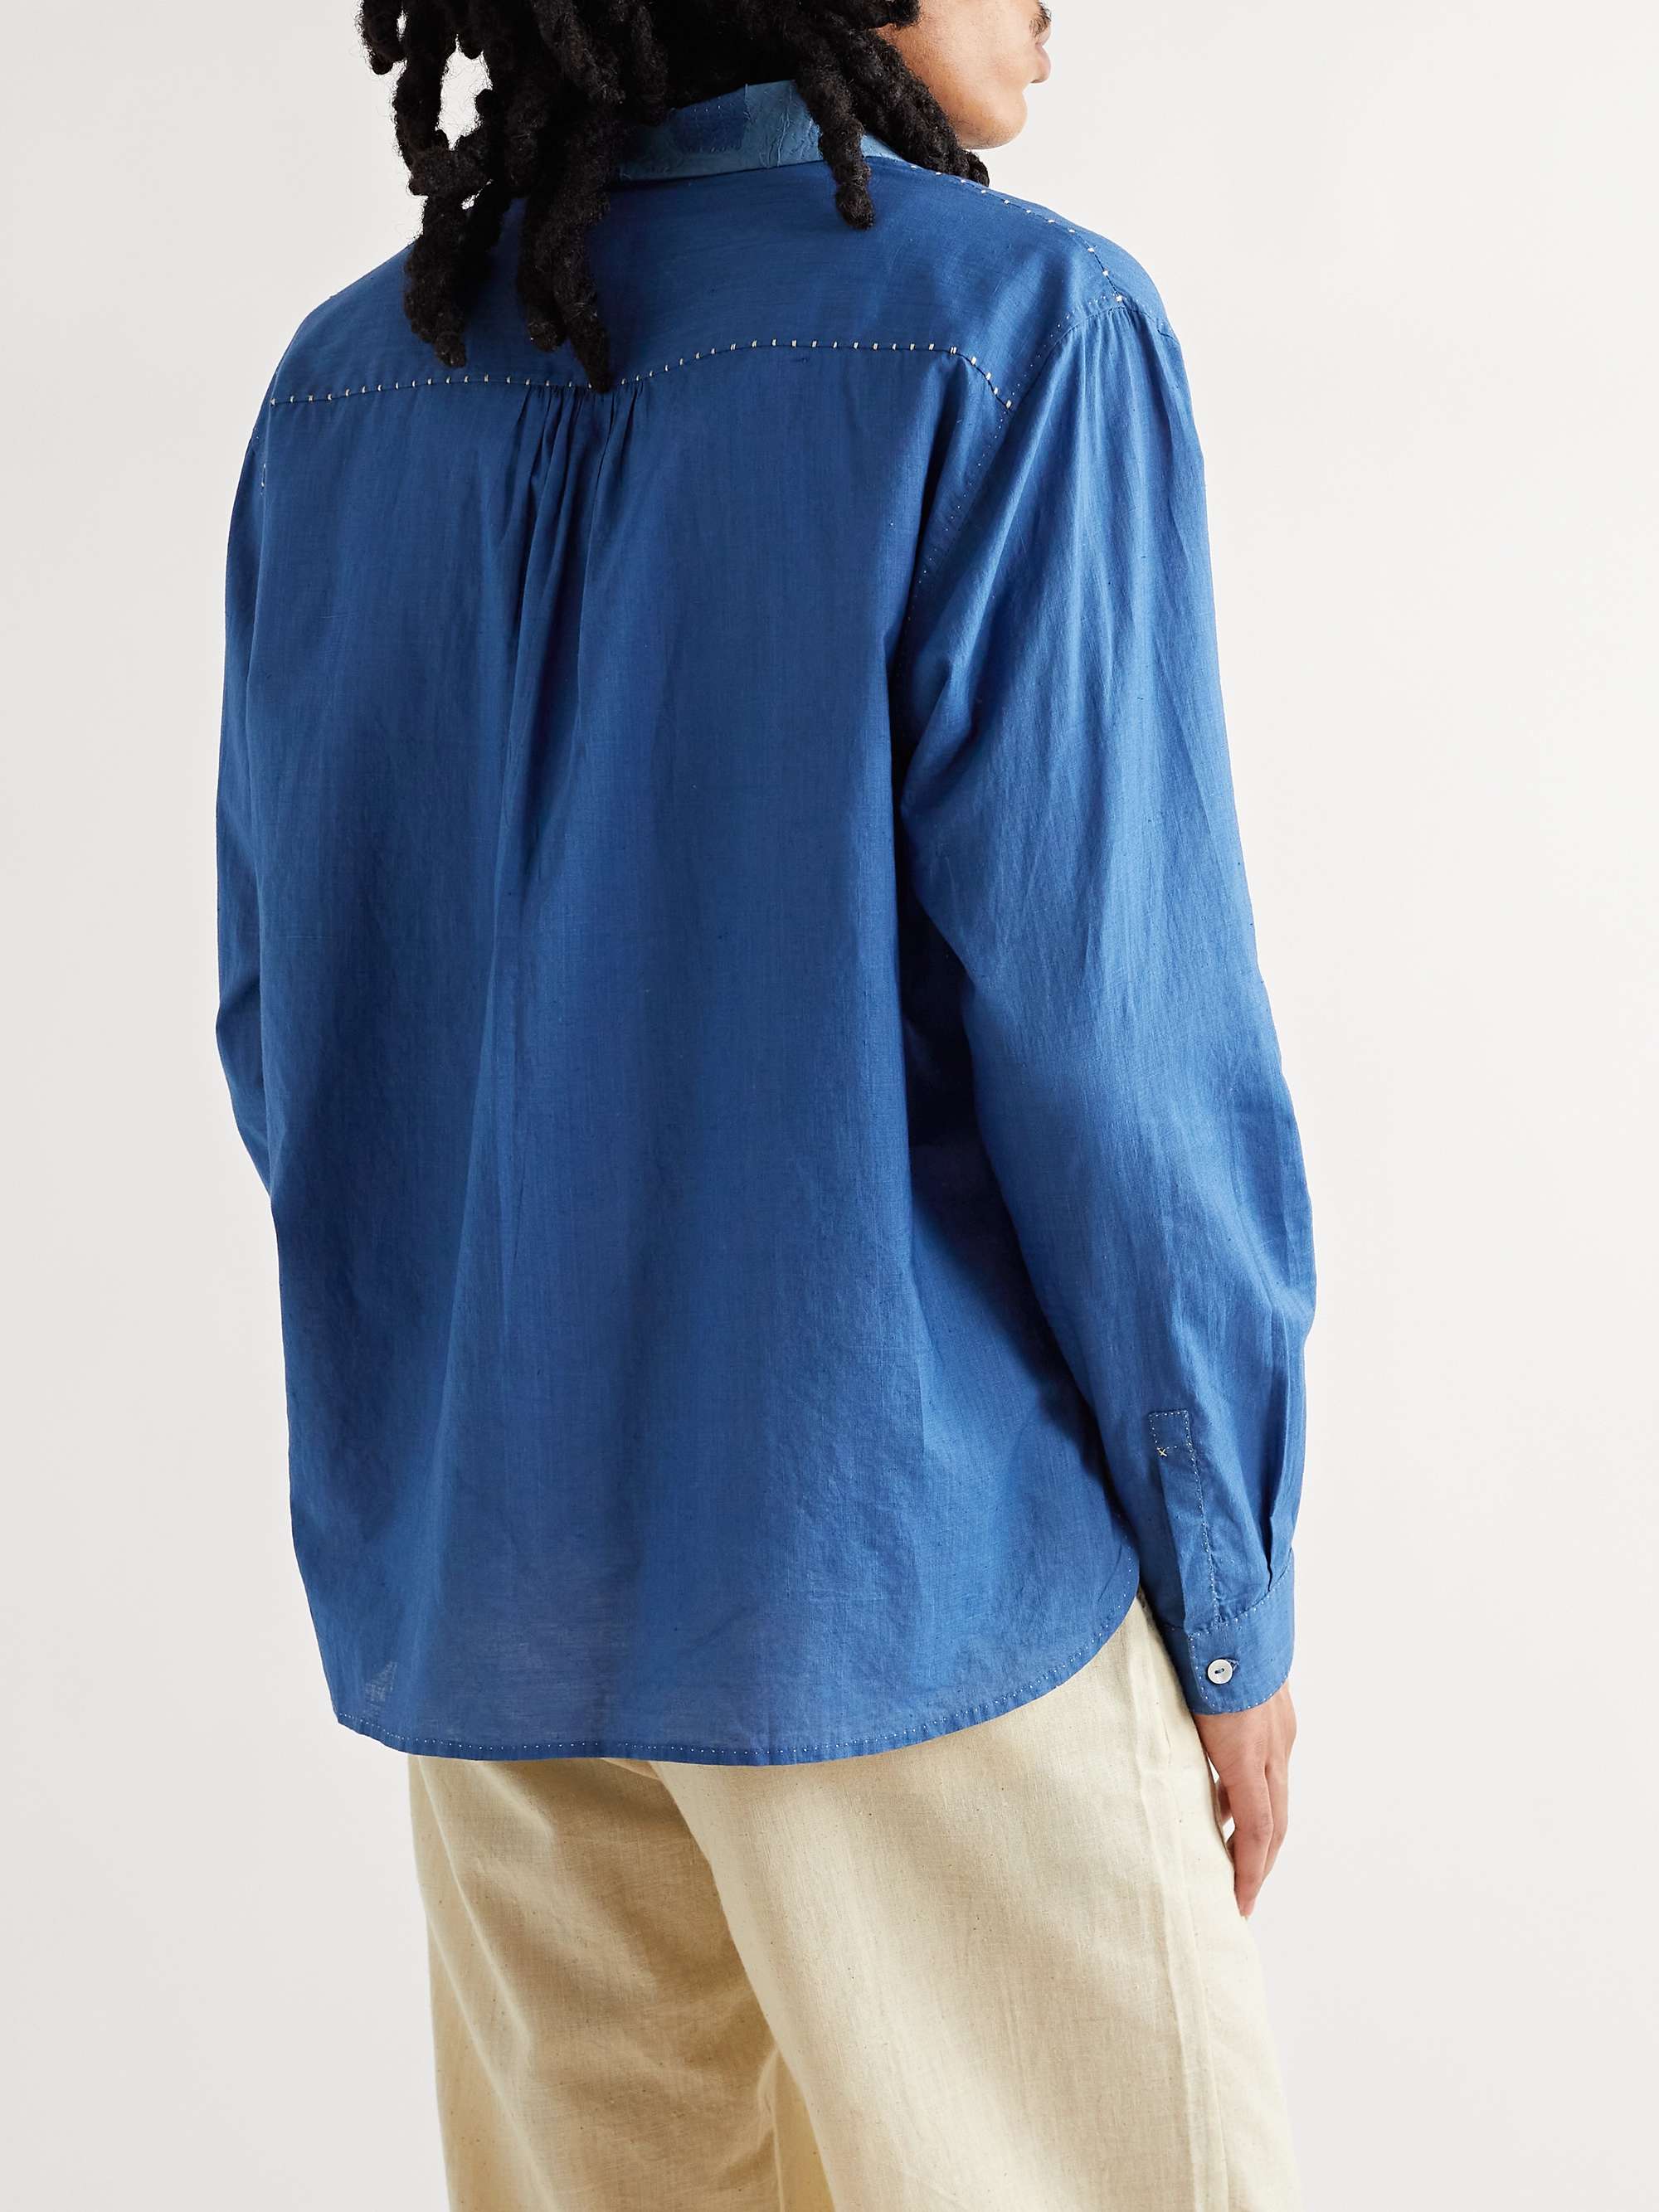 11.11/ELEVEN ELEVEN Embroidered Indigo-Dyed Slub Cotton-Voile Shirt